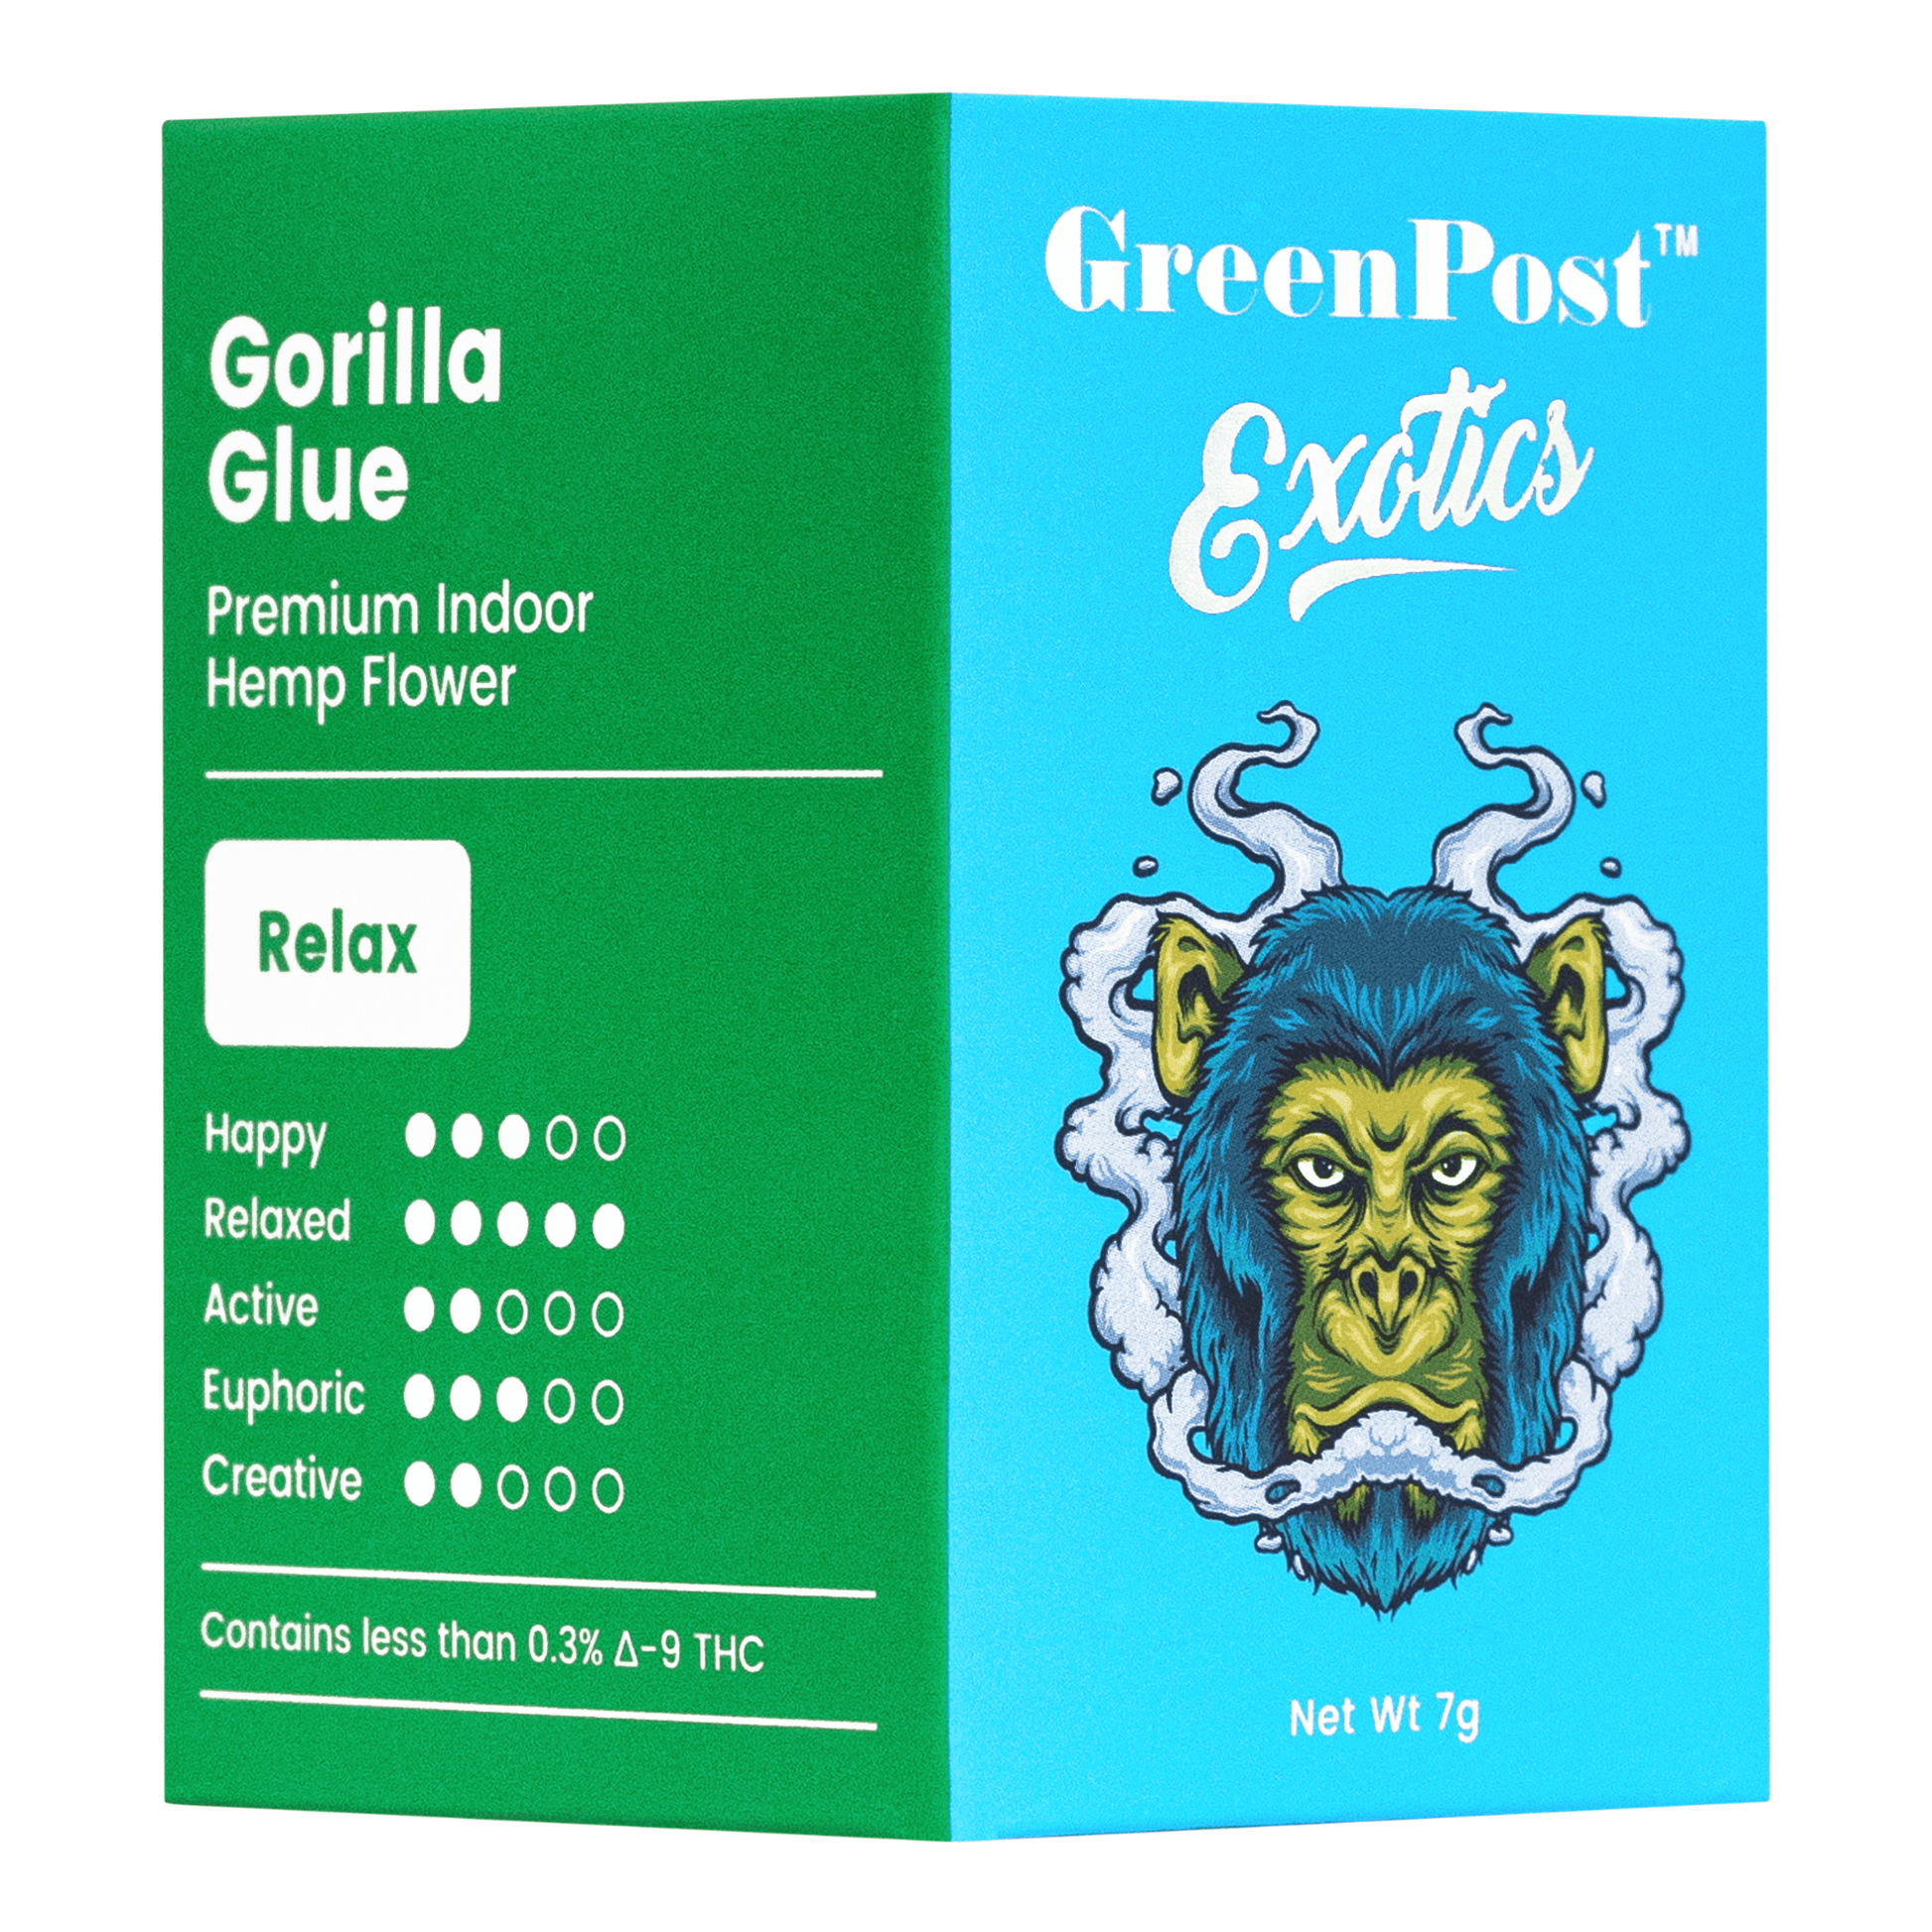 Gorilla Glue (Hybrid) - GreenPost CBD - www.GreenPostCBD.com